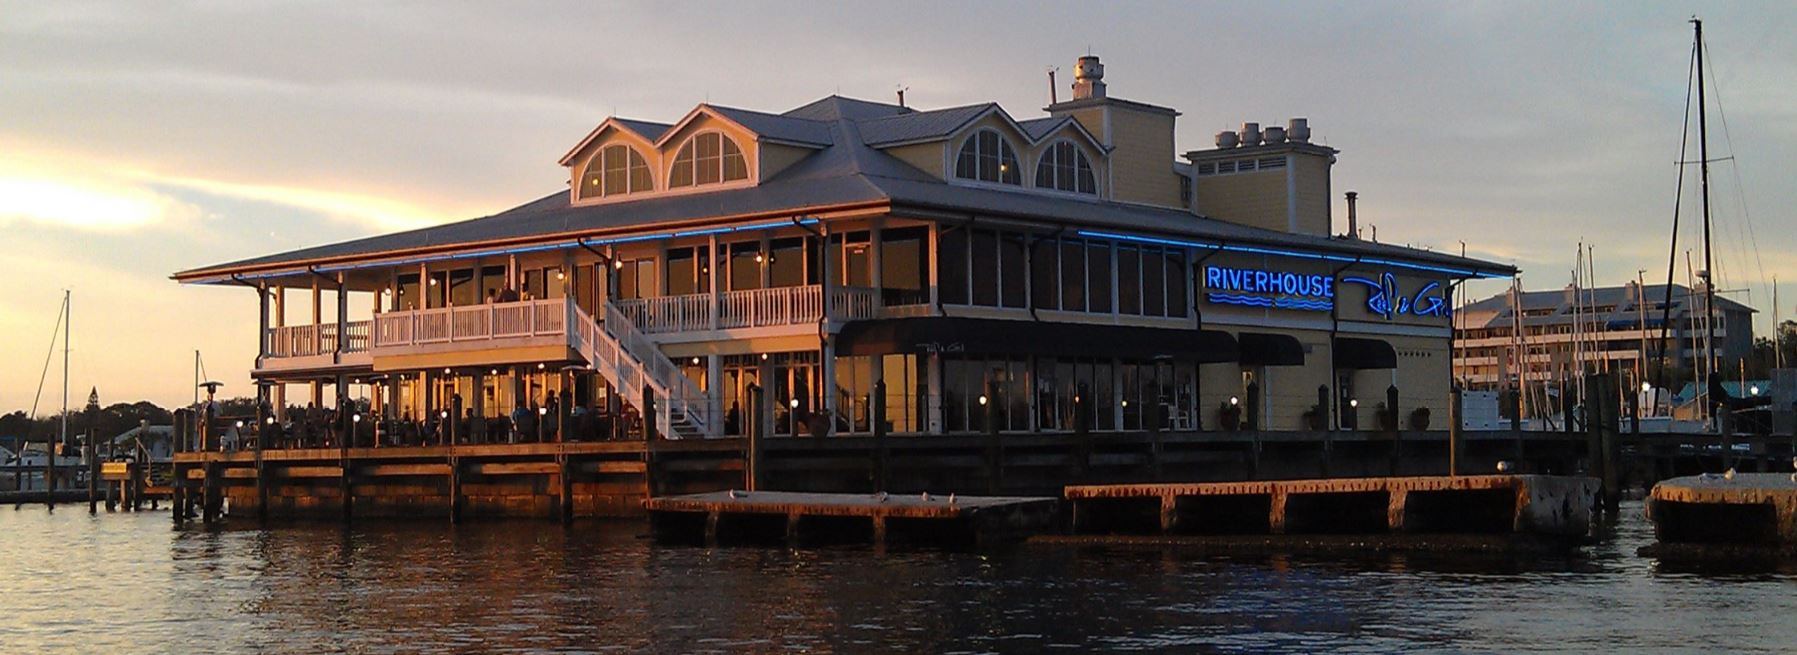 Riverhouse Waterfront Restaurant - 2